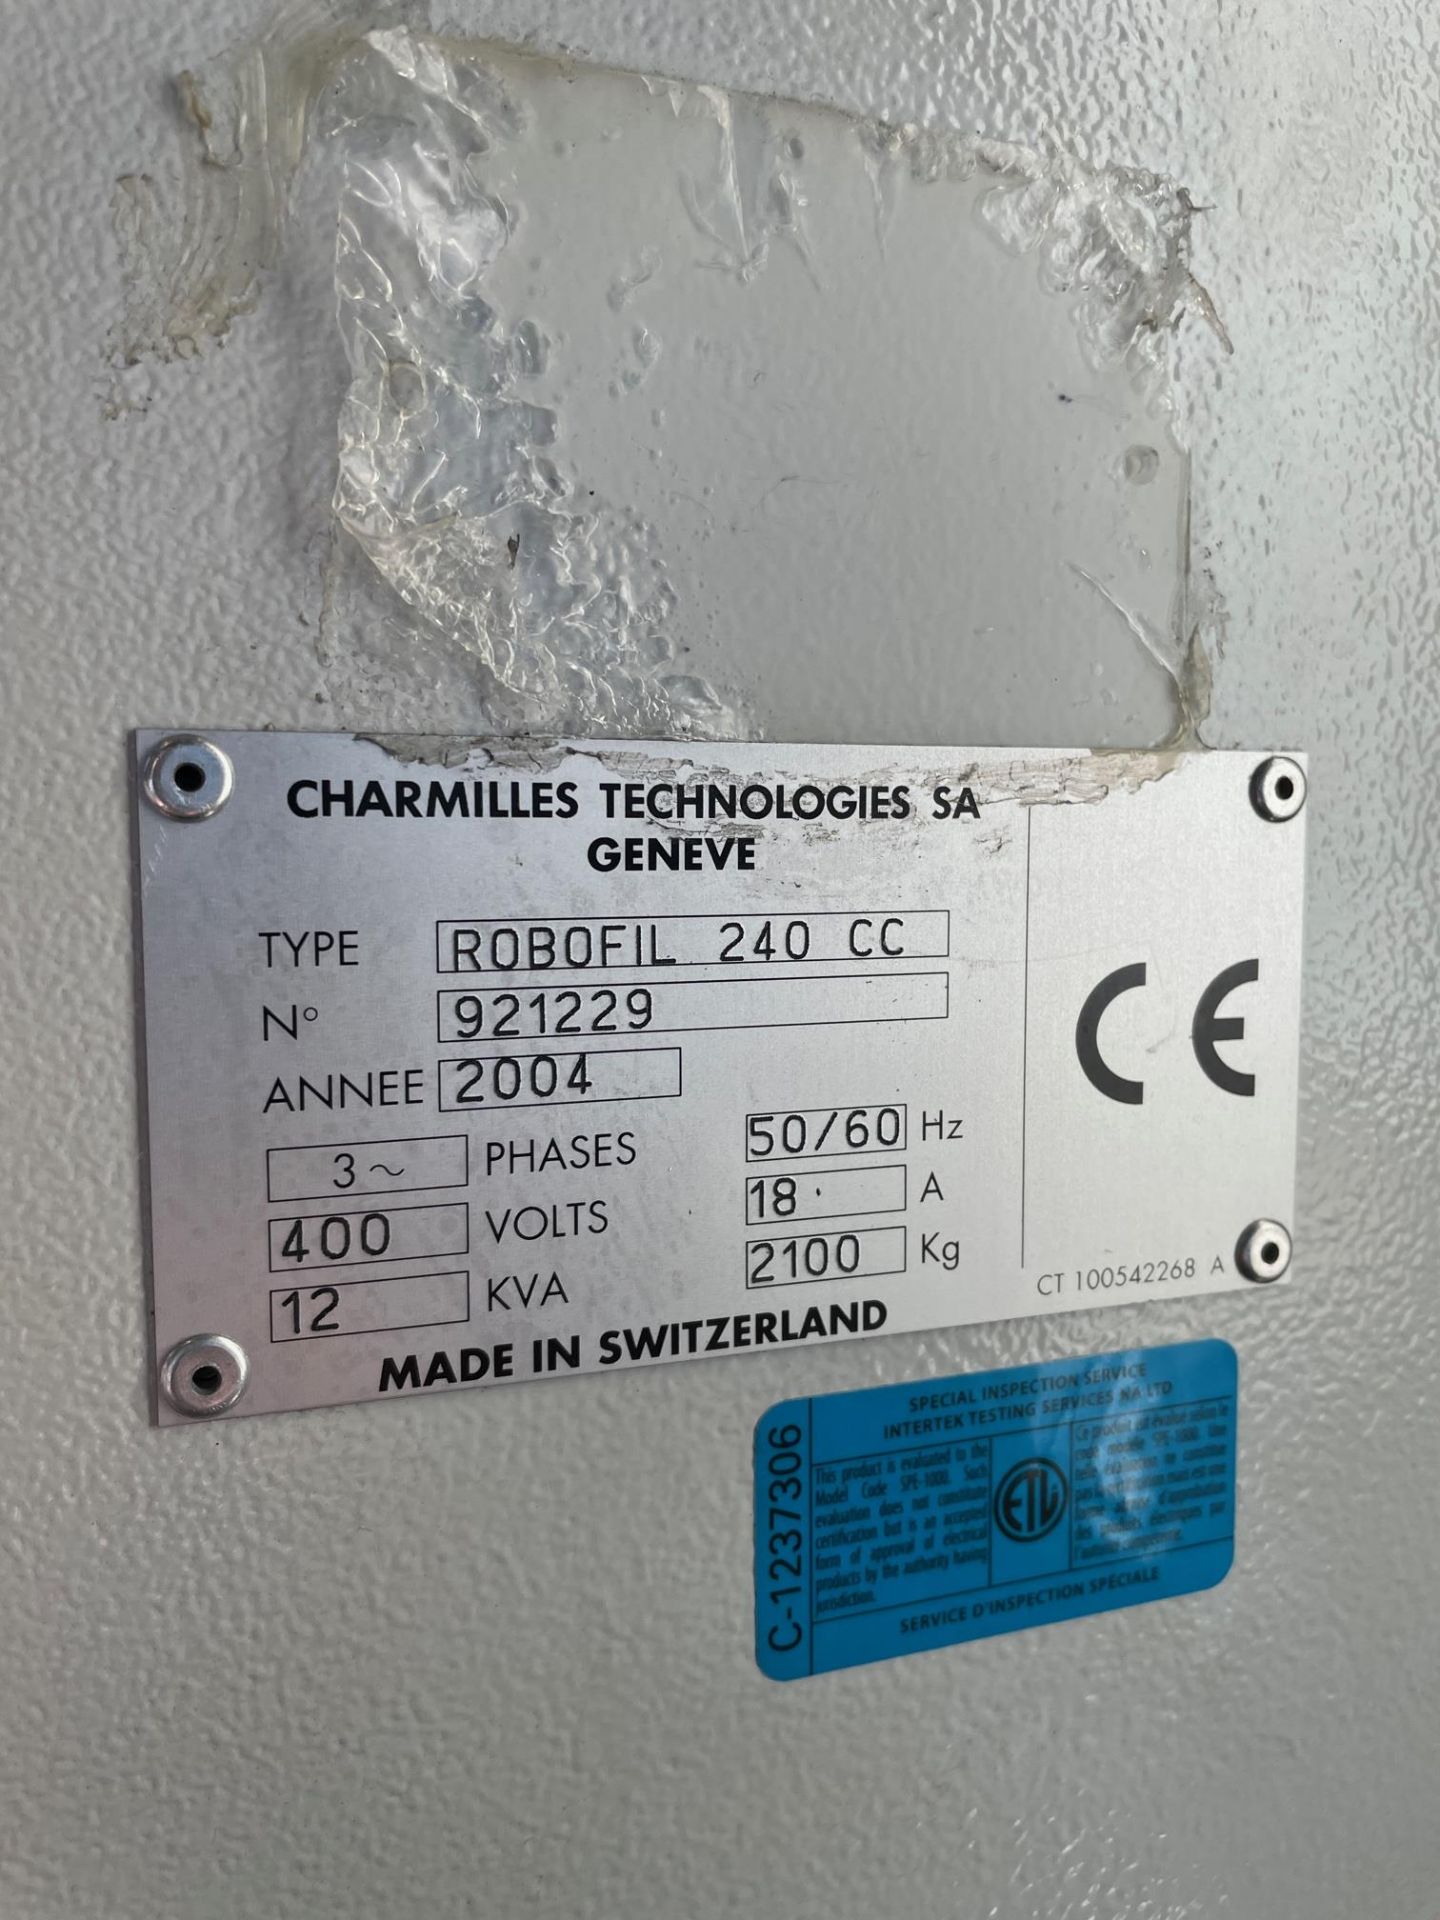 ROBOFIL CHARMILLE EDM CNC, MODEL 240CC, S/N 921229, LOCATION, MONTREAL, QUEBEC - Image 5 of 9